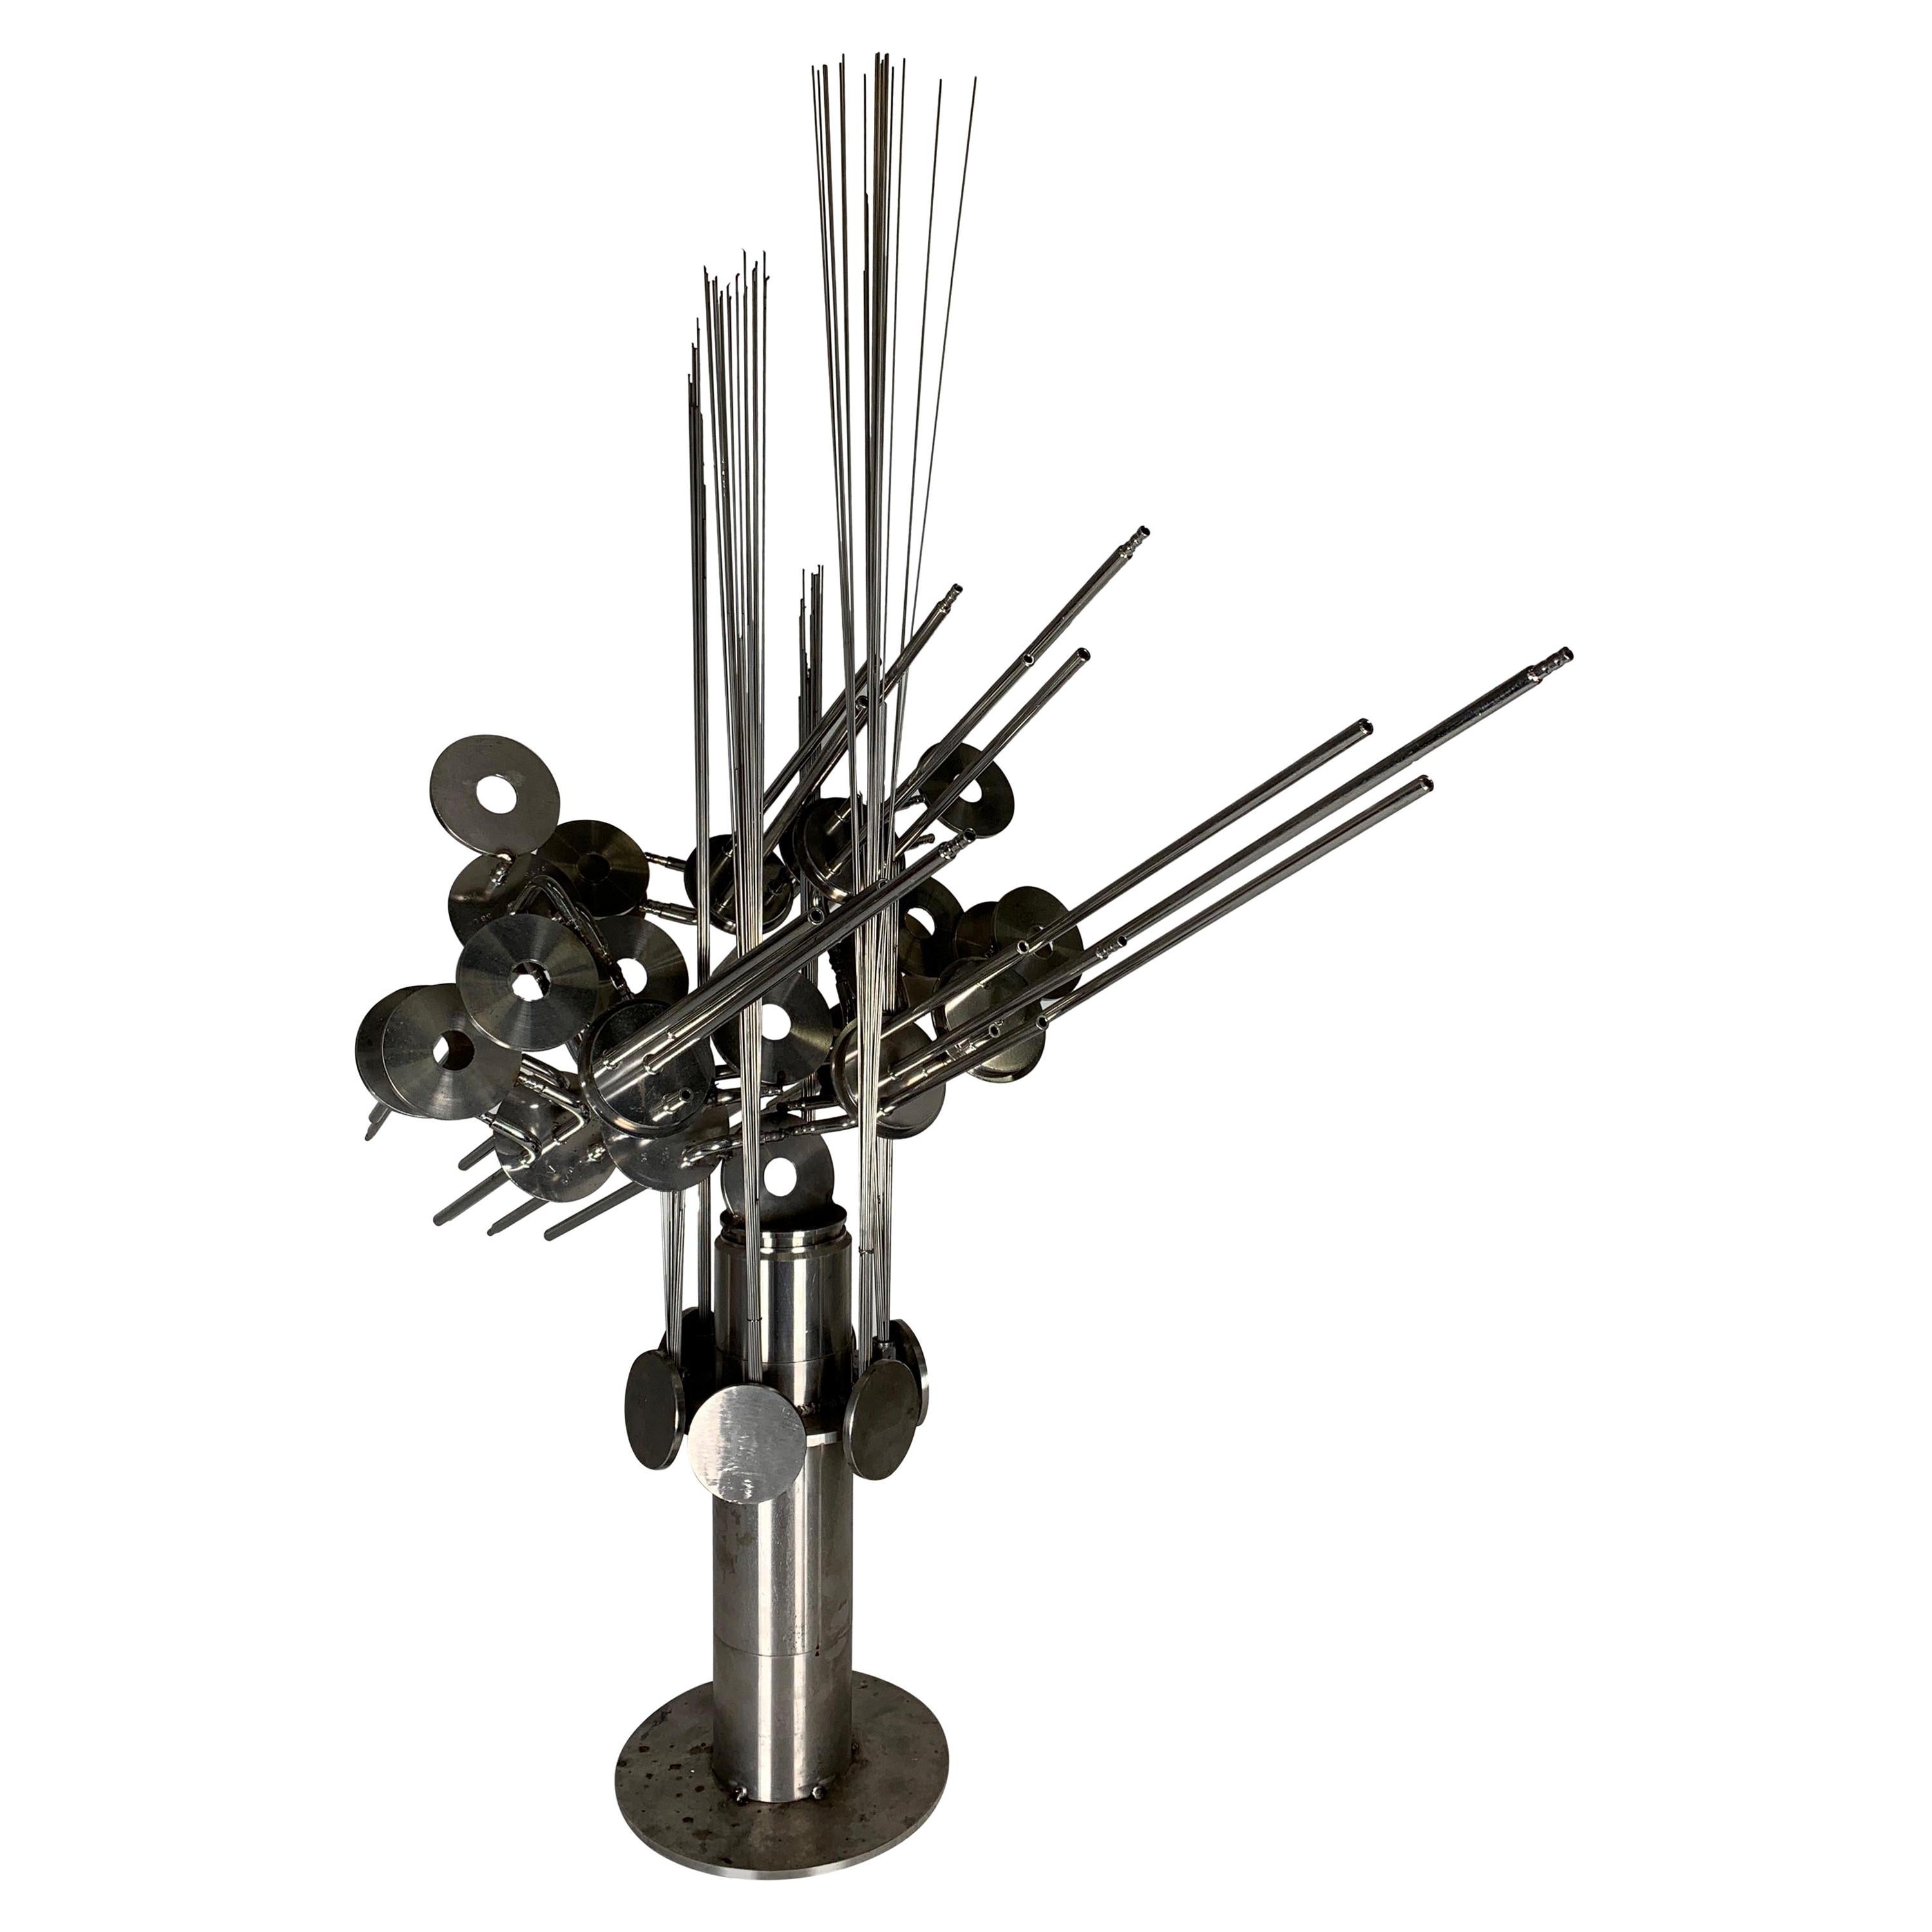 Welded Steel Table Sculpture "Interdimensional Antennae" by D. Phillips